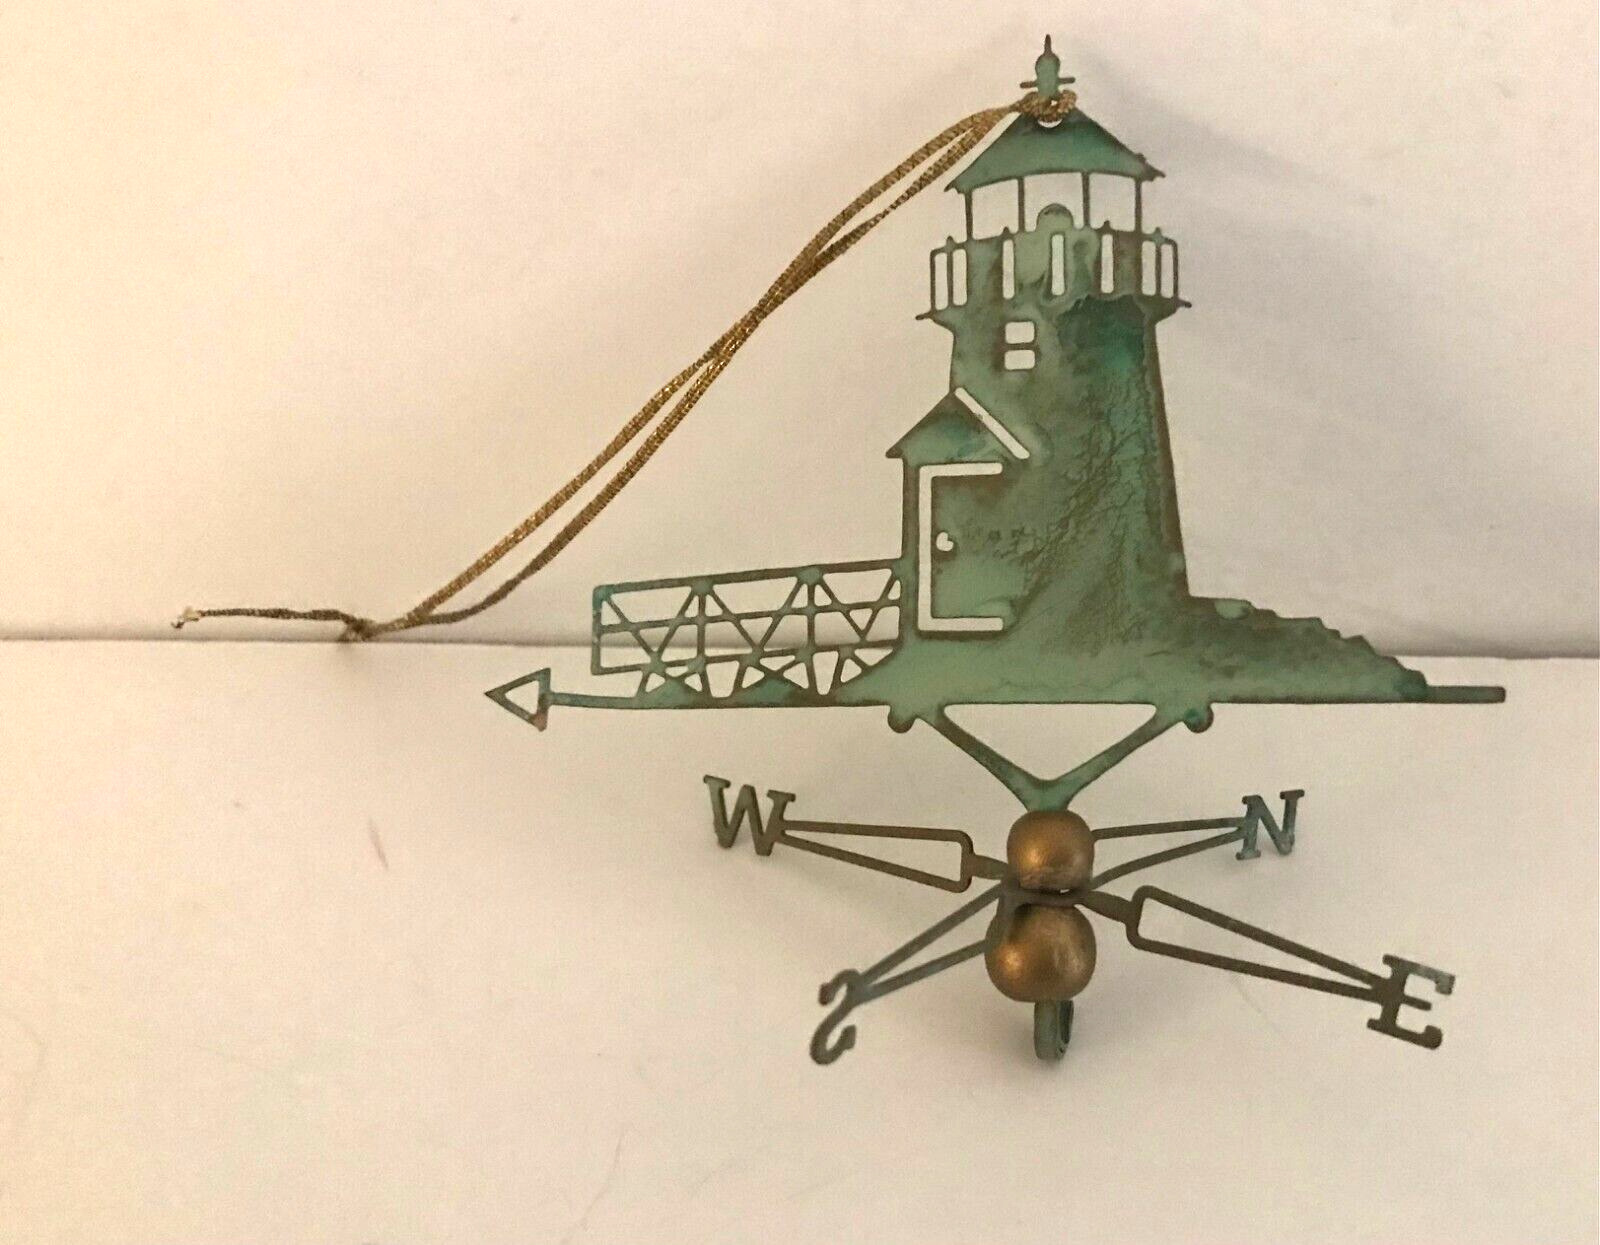 Copper Mermaid ~ Brant Point Lighthouse ~ Weathervane Verdigris Hanging Ornament